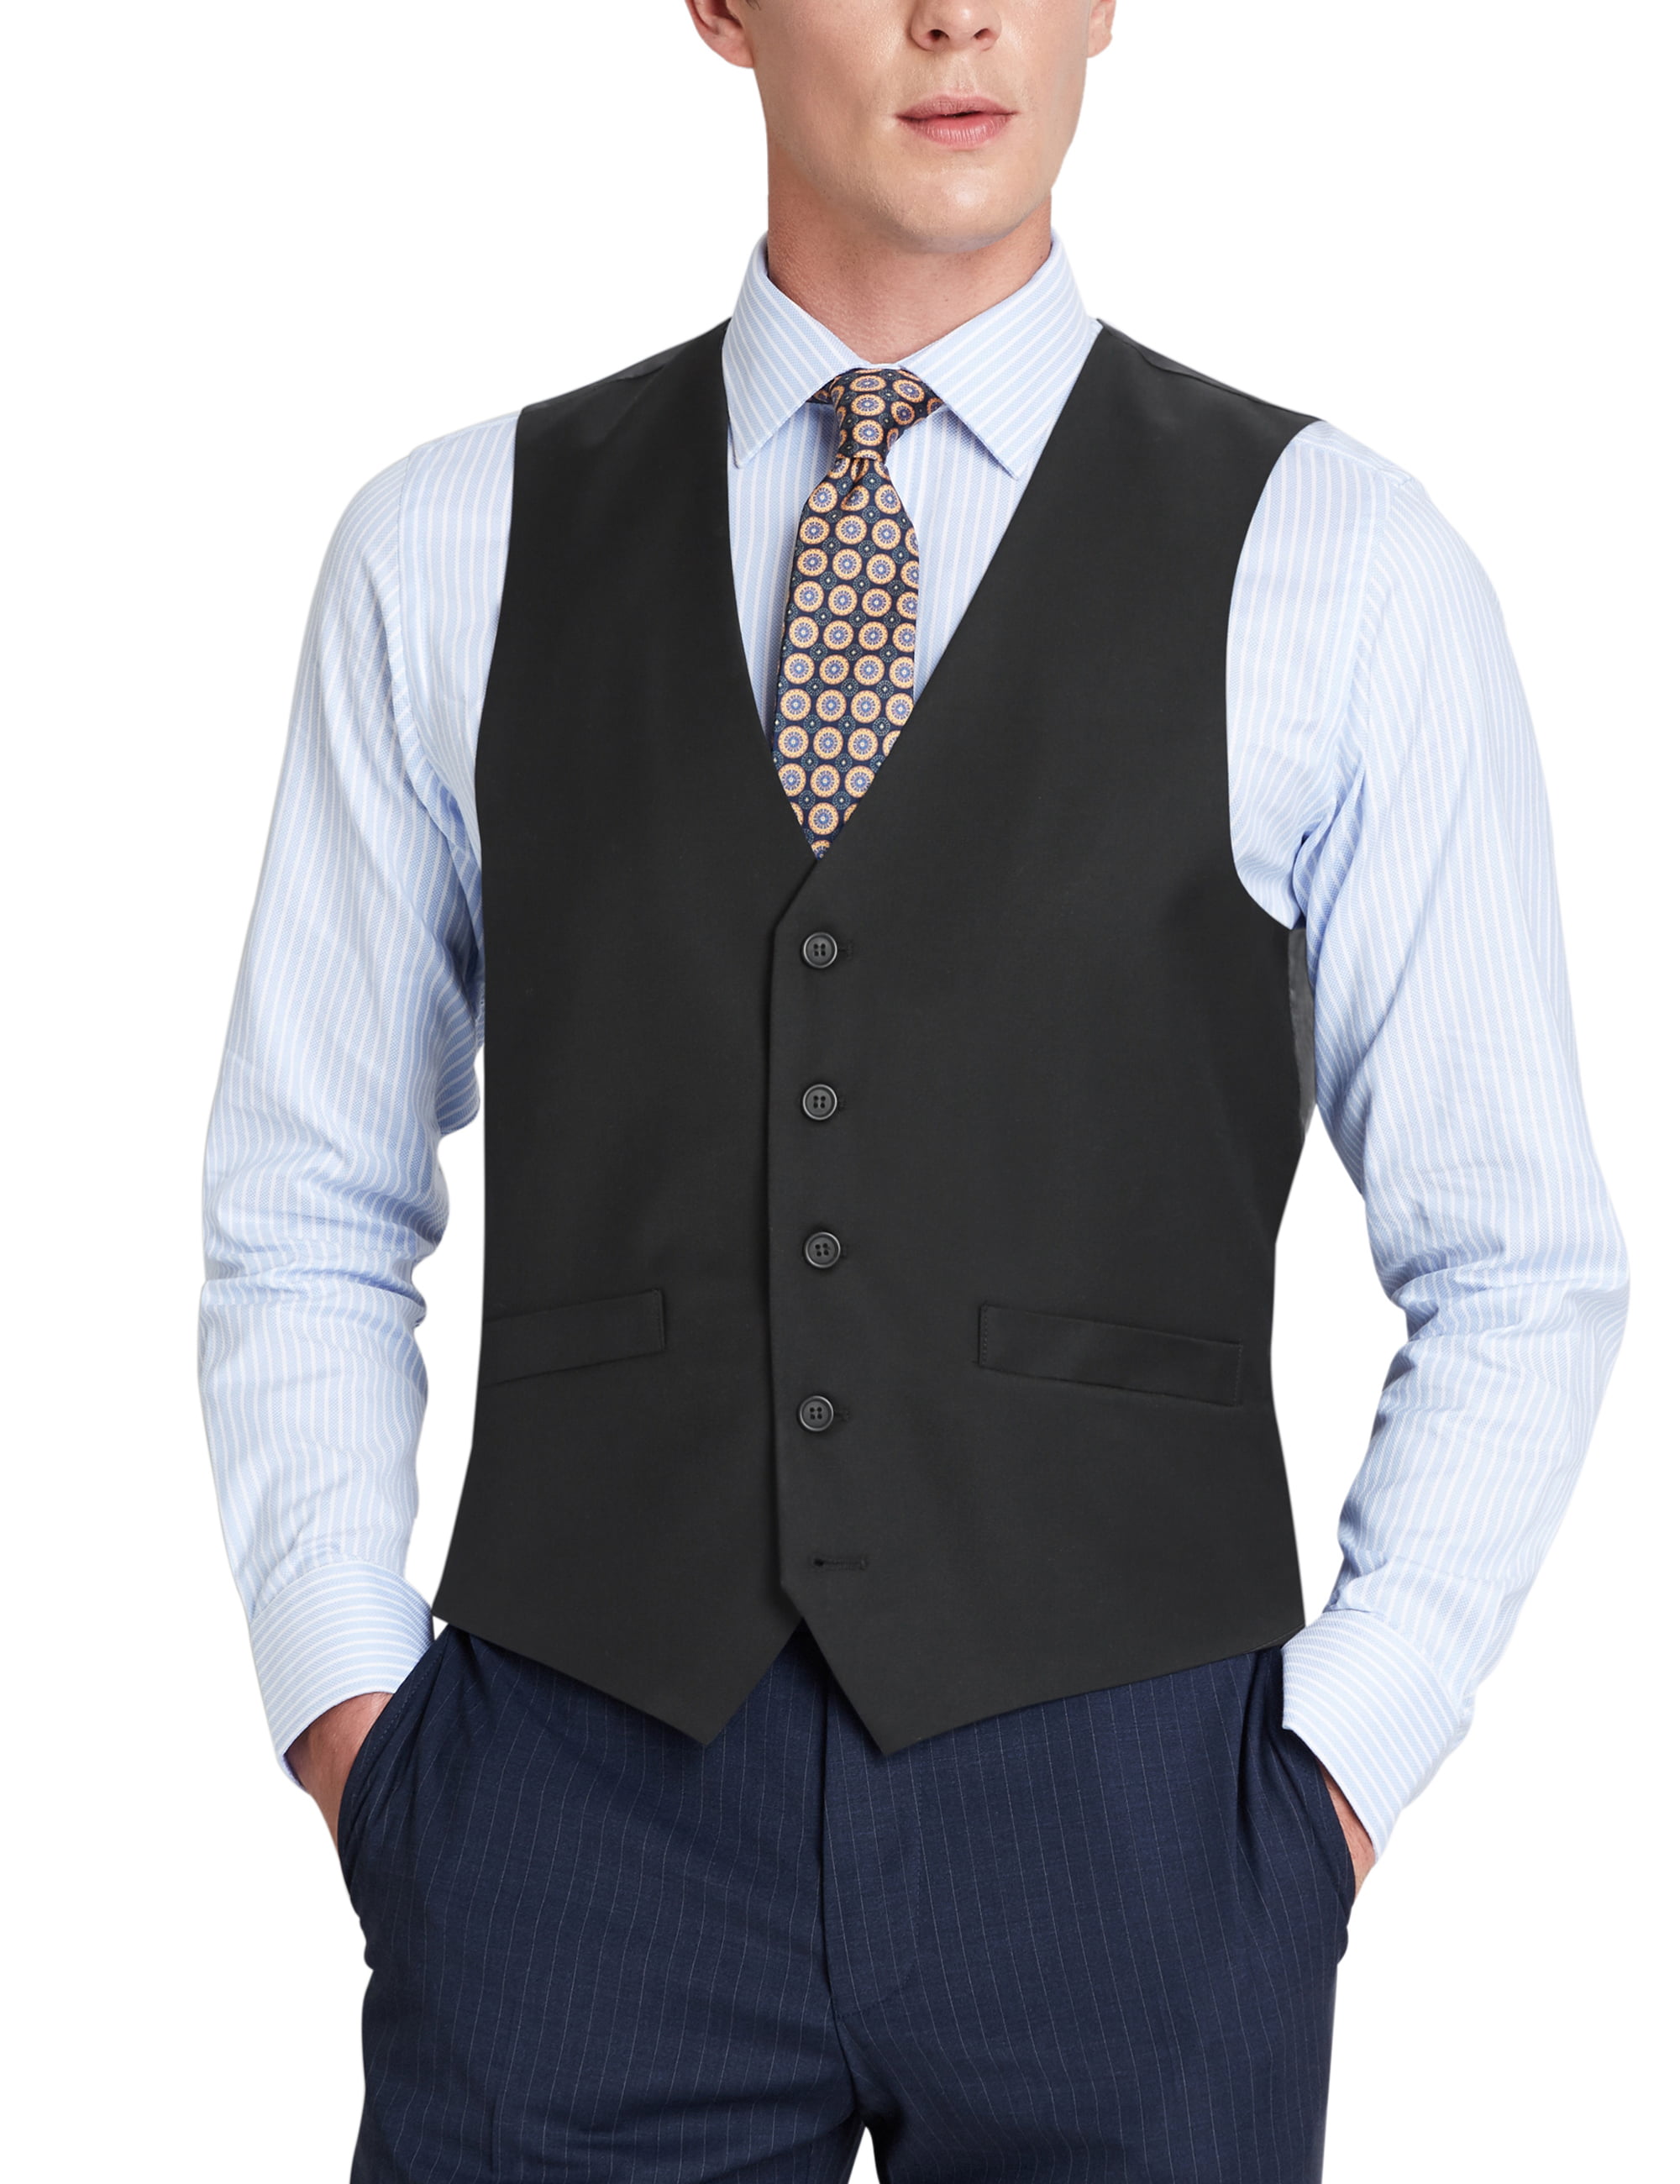 Pingtr Mens Classic Retro Blazer Waistcoat U-Neck Sleeveless Slim Fit Vest Jacket Tailored Fit Smart Wedding Dress Tux Vest Suit Vests